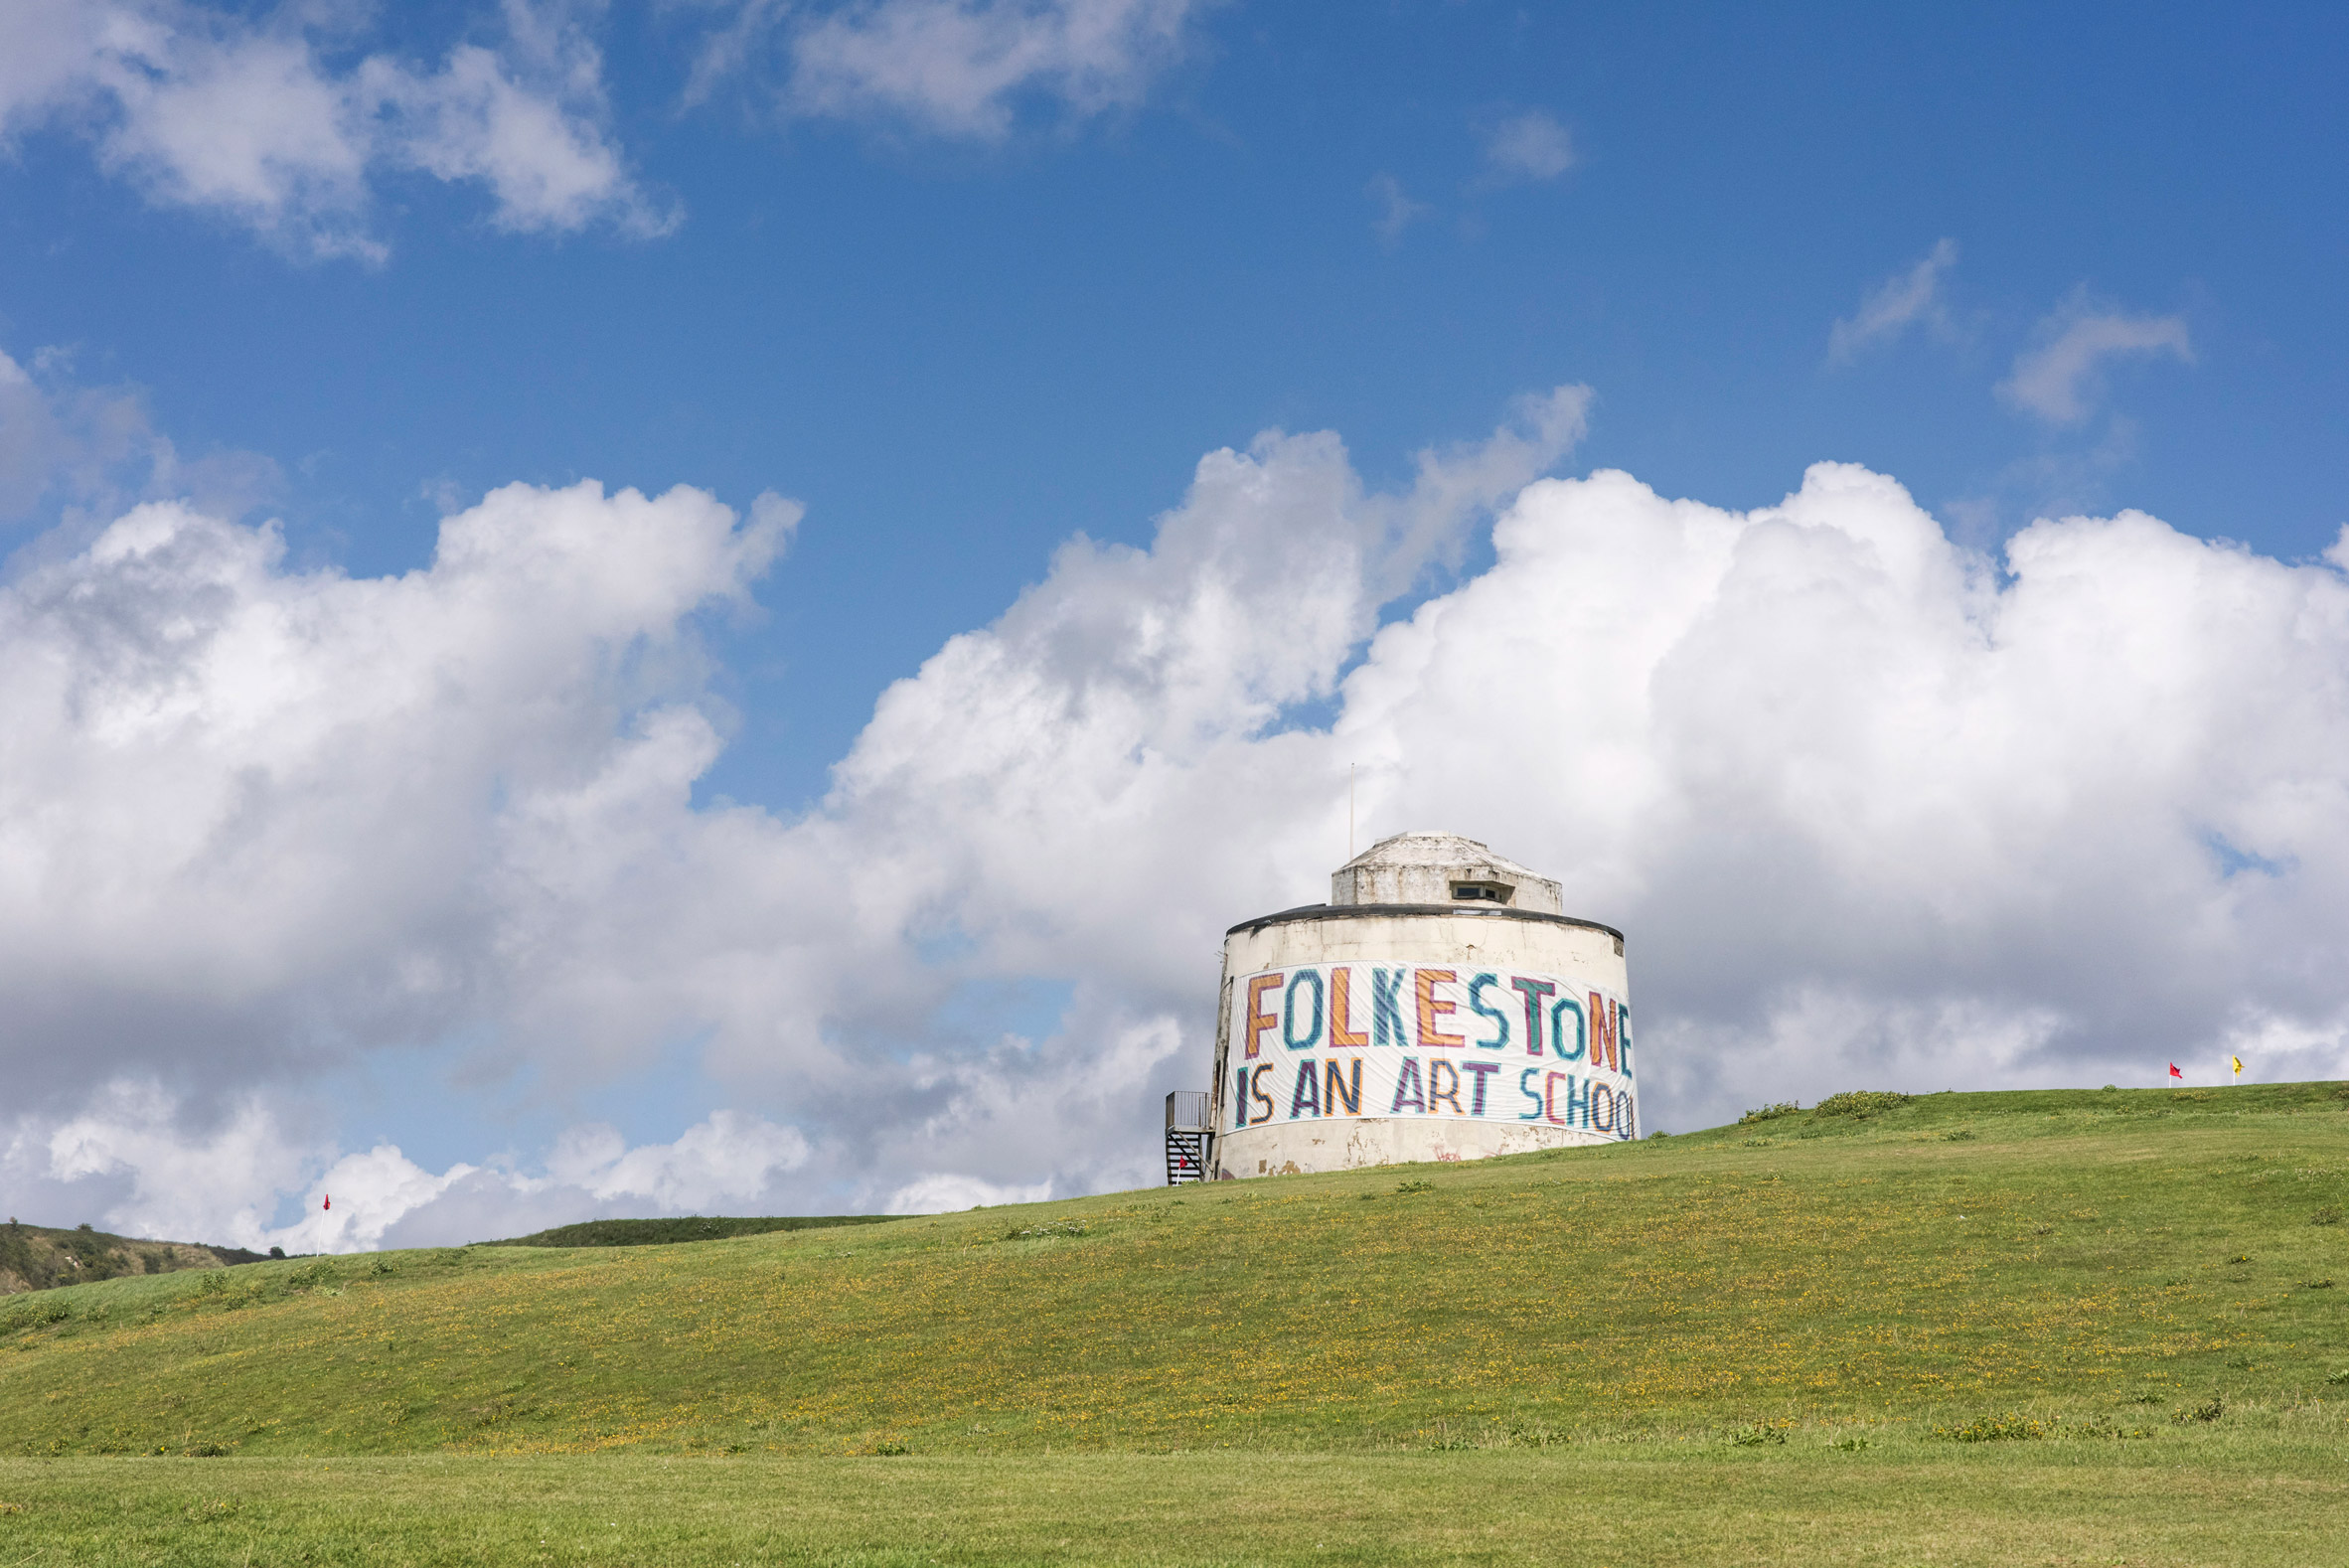 Folkestone is an art school by Bob and Roberta Smith